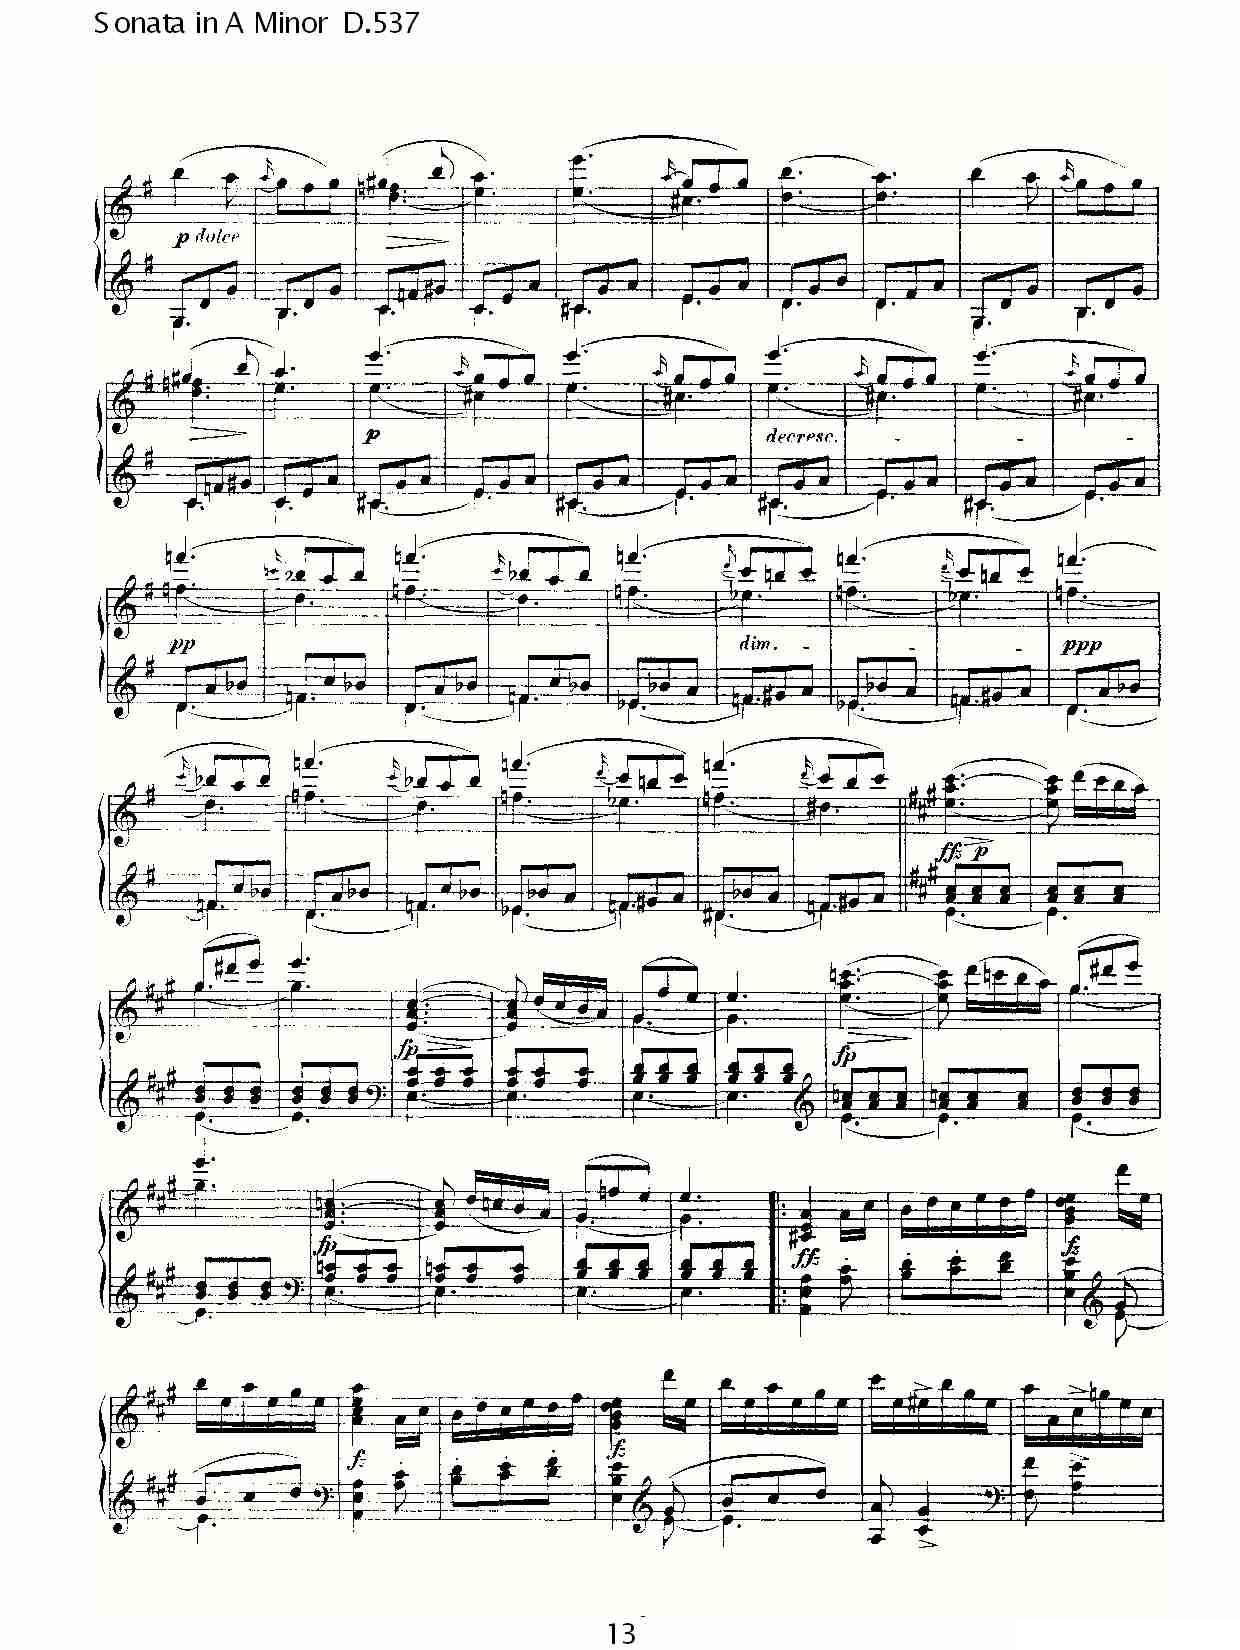 Sonata in A Minor D.537（A小调奏鸣曲 D.537）钢琴曲谱（图13）